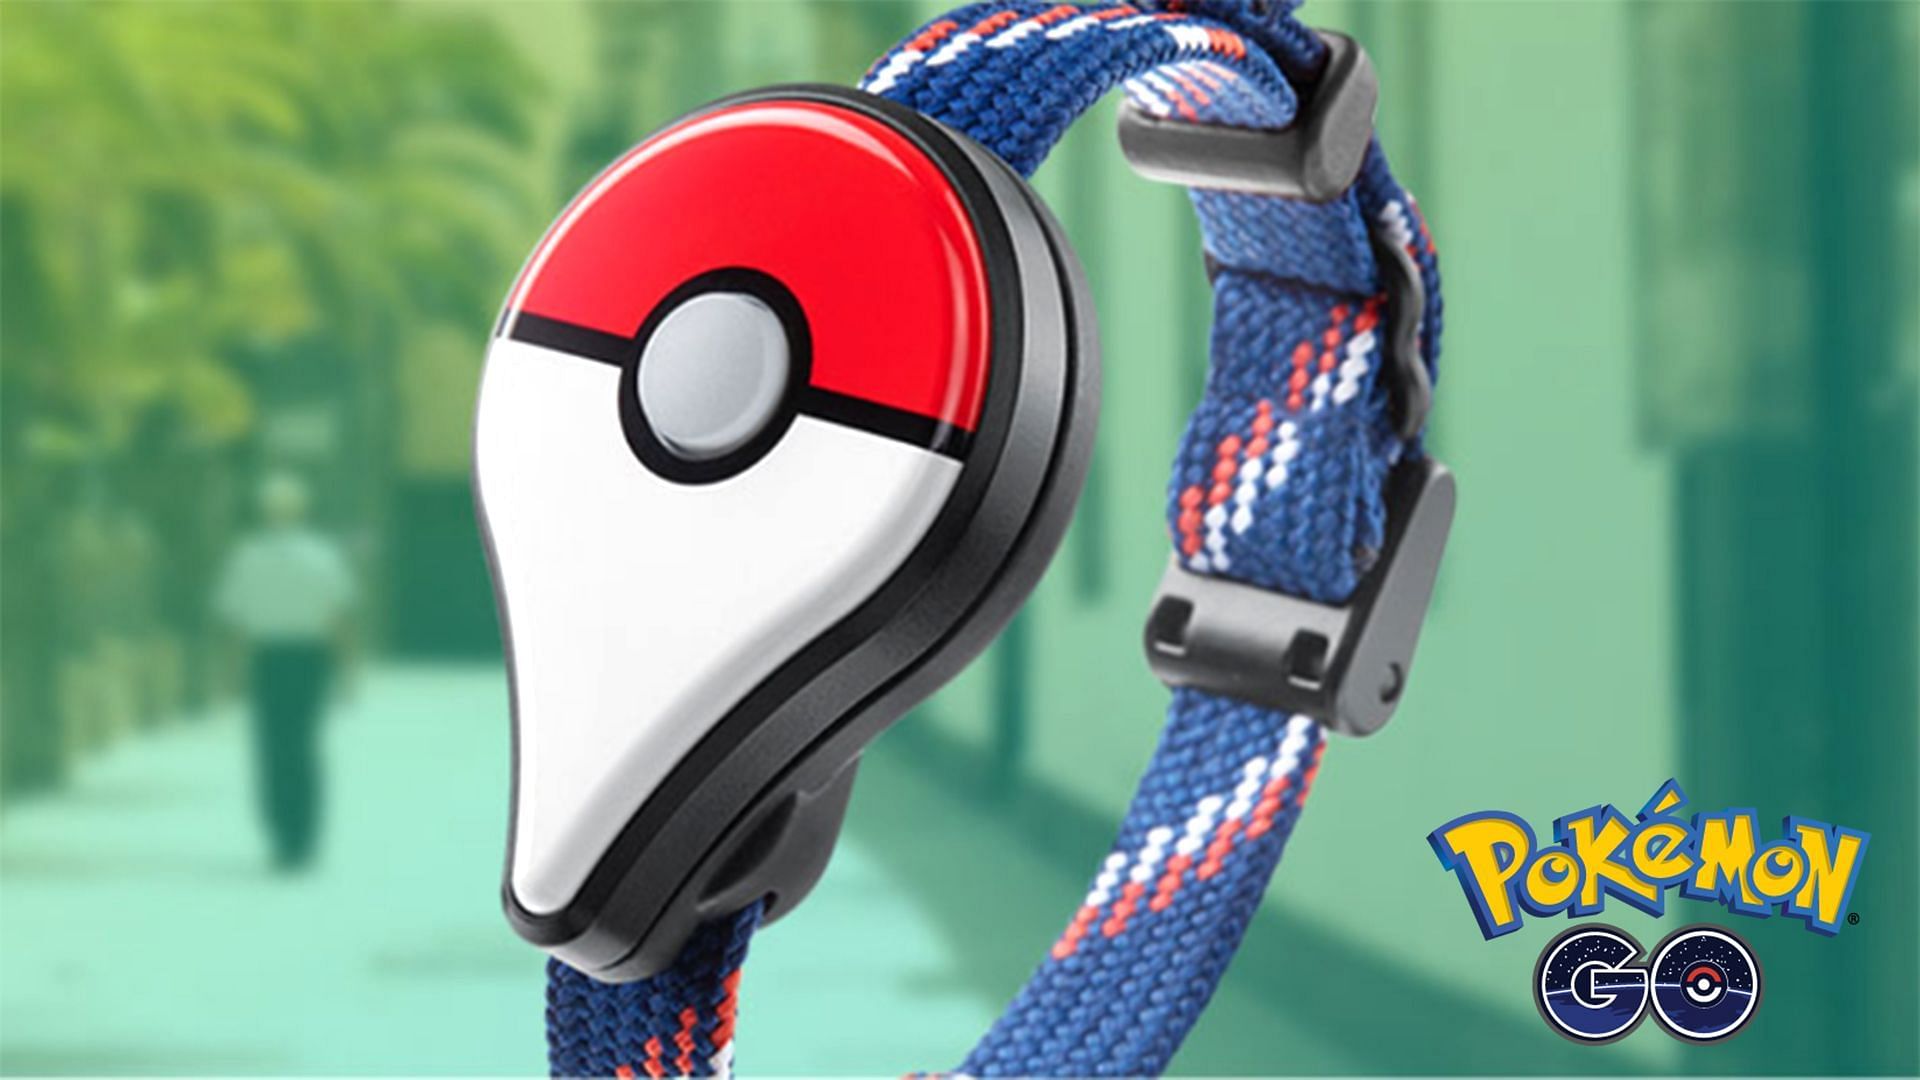 Pokemon GO Plus Bracelet can catch Pokemon Automatically (Image via The Pokemon Company)